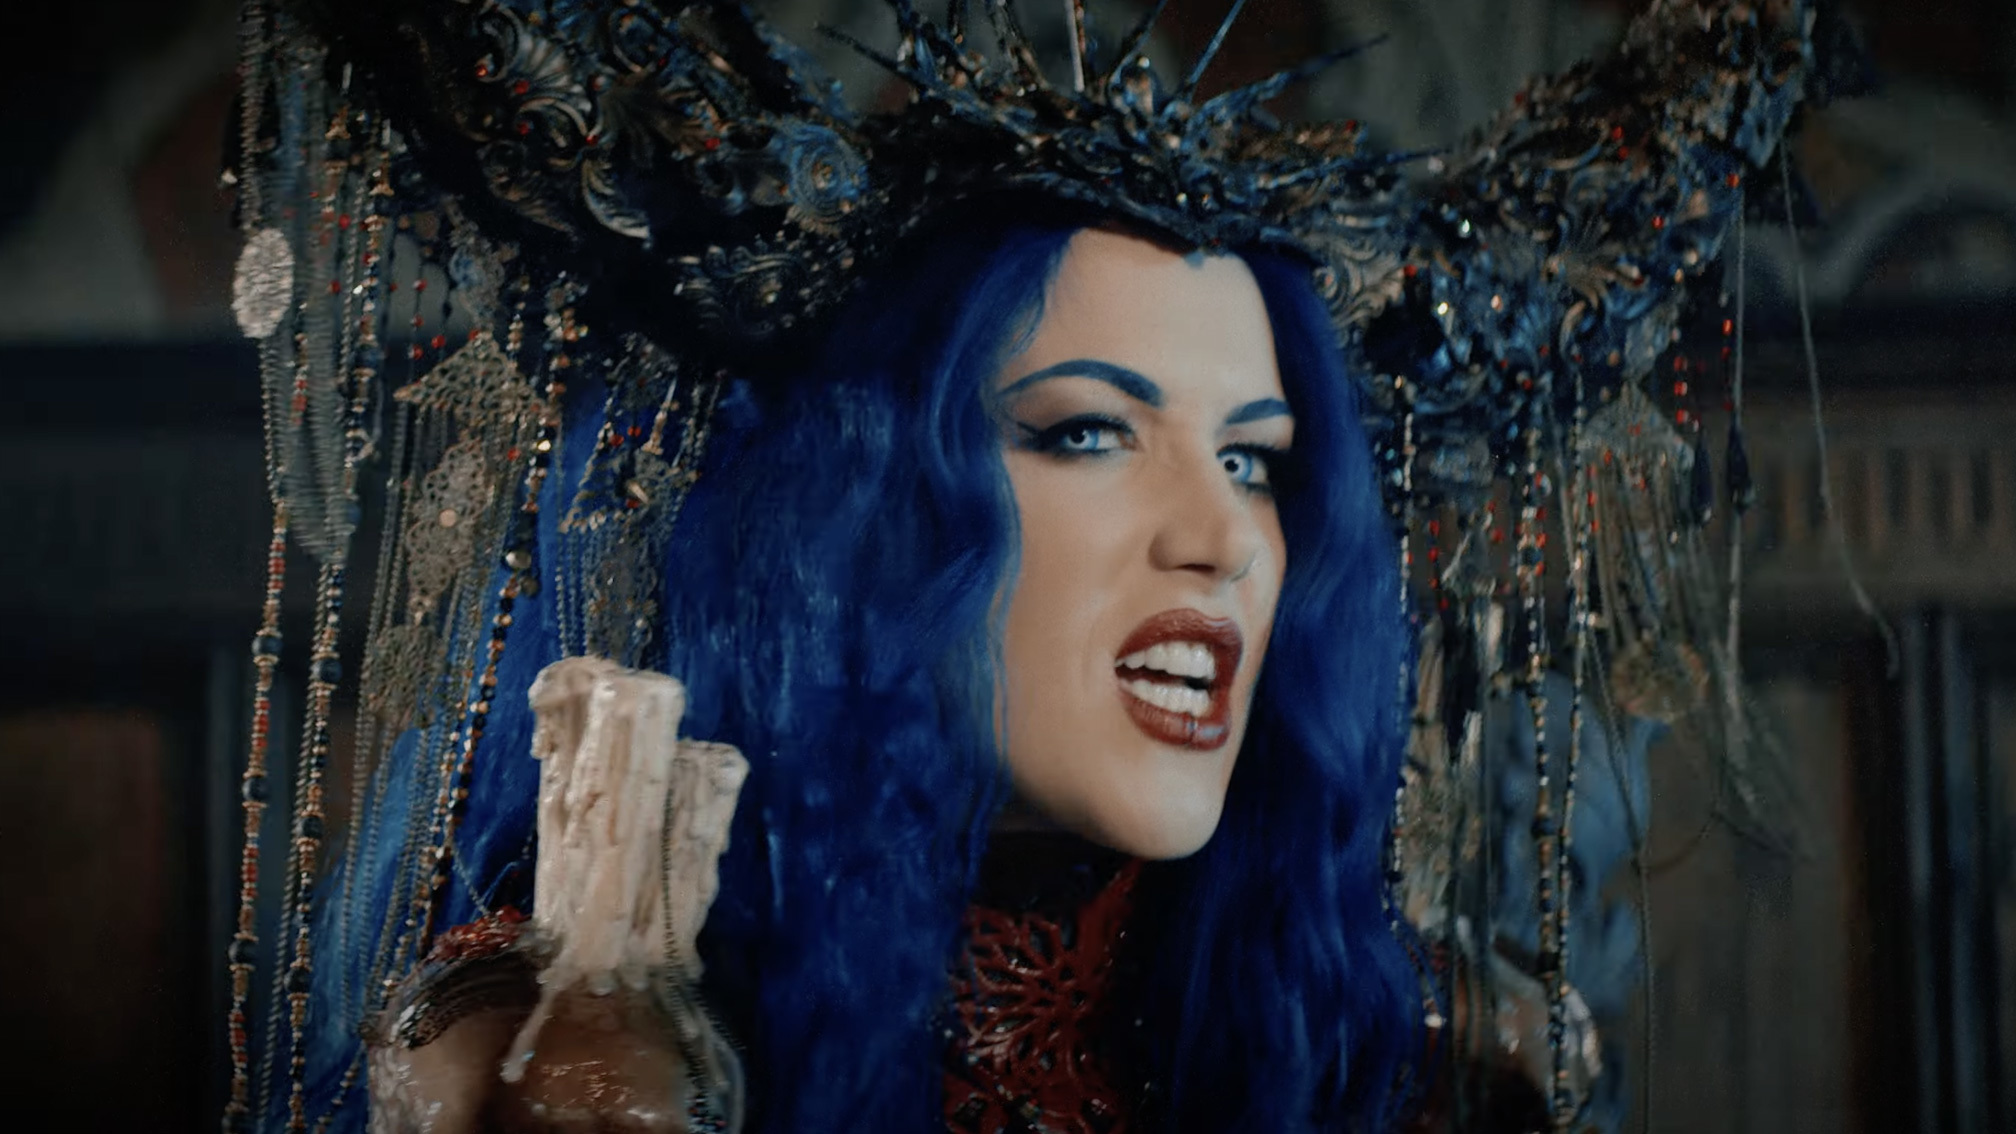 Alissa in Powerwolf's official video